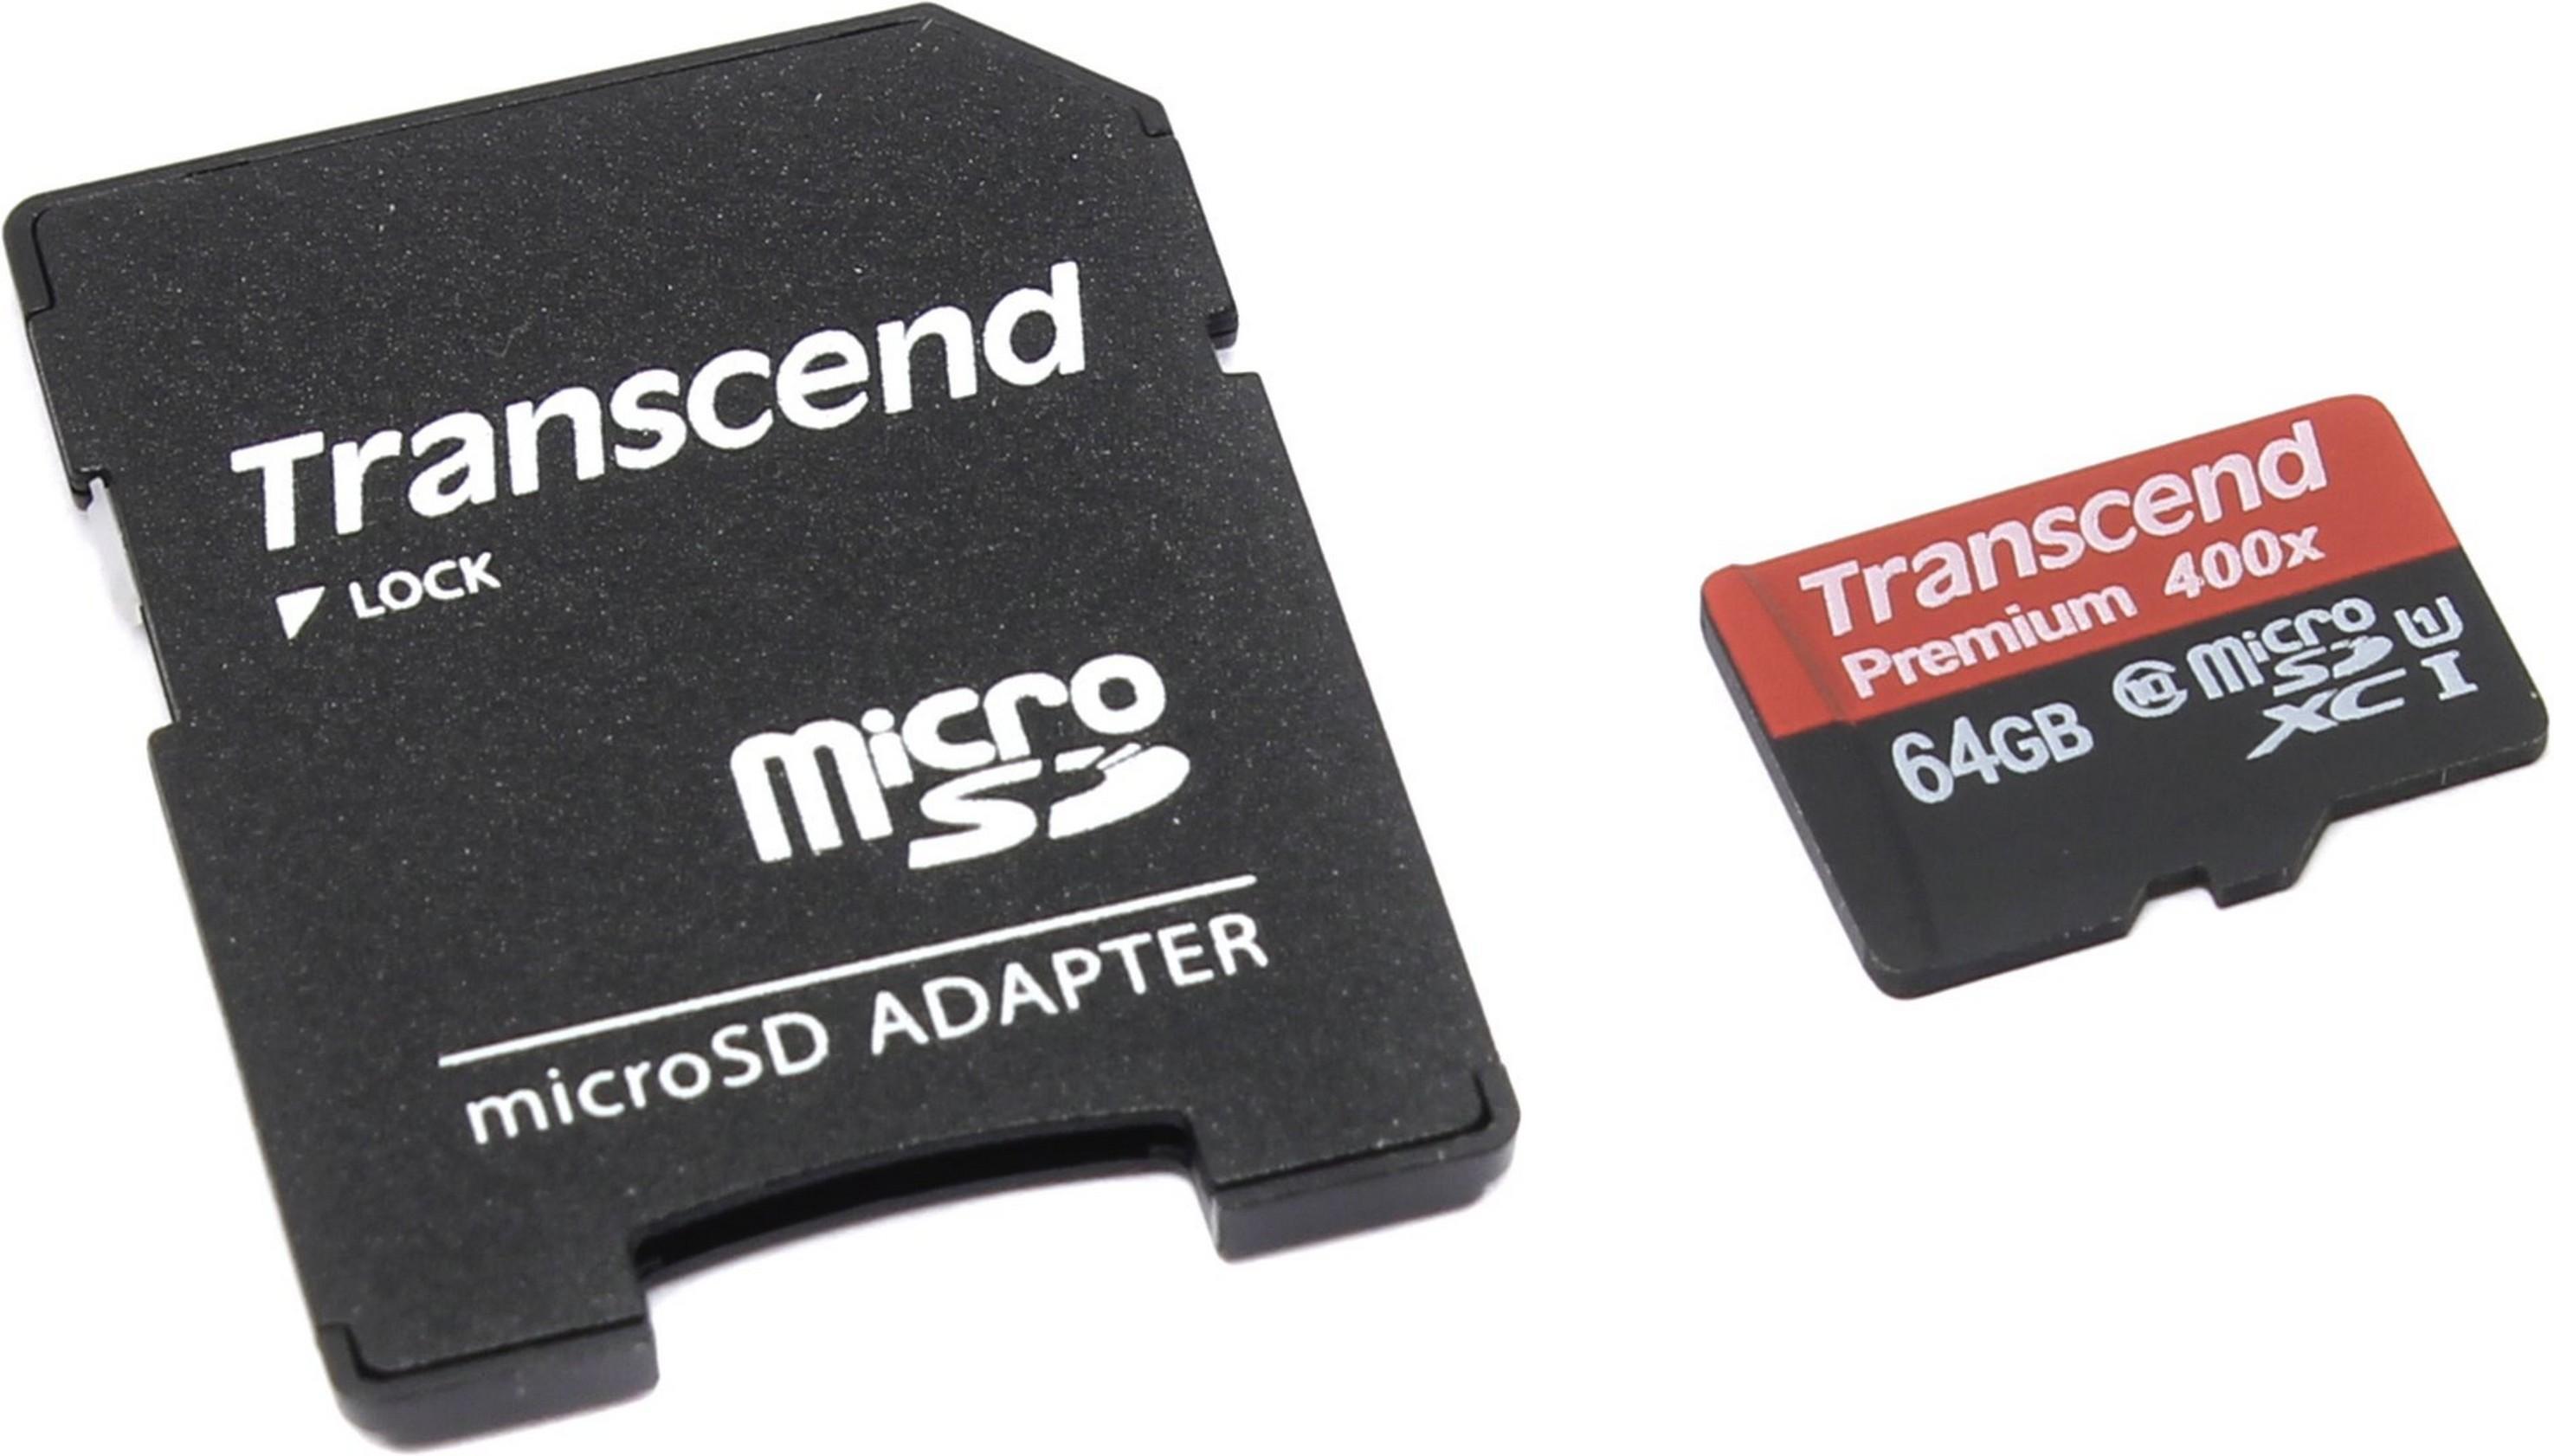 Купить карту памяти на 64 гб. Карта памяти Transcend ts64gusdu1 400x. Карта памяти Transcend 64gb. Transcend MICROSD SD Adapter. Transcend ts32gusdu1.